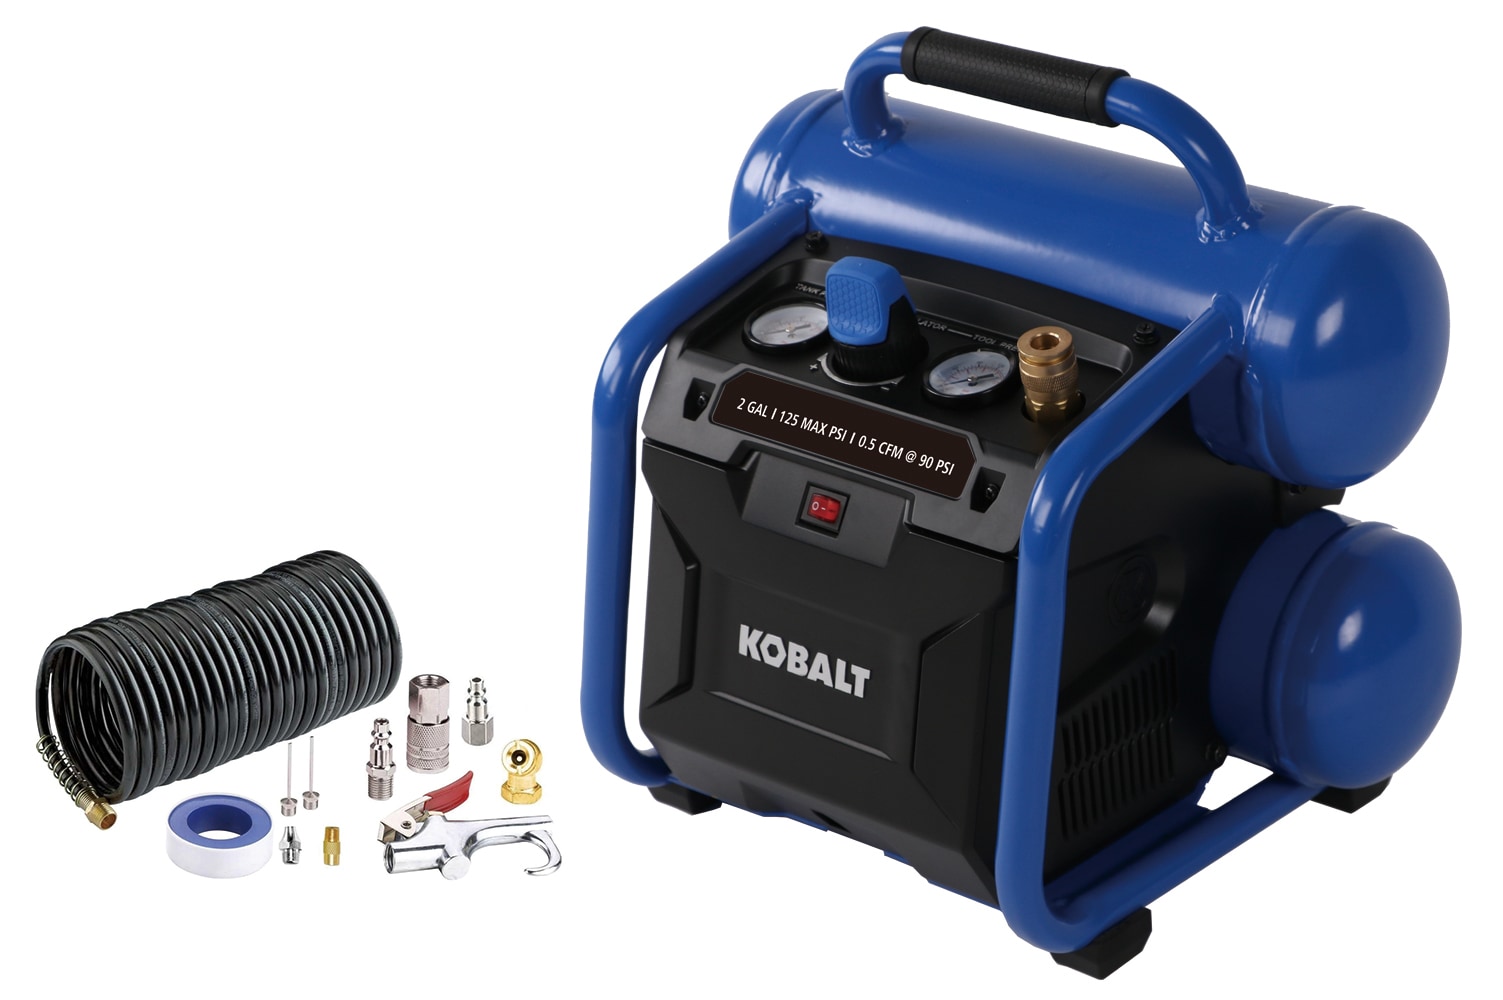 Kobalt QUIET TECH 2-Gallons Portable 125 Psi Hot Dog Quiet Air Compressor  in the Air Compressors department at